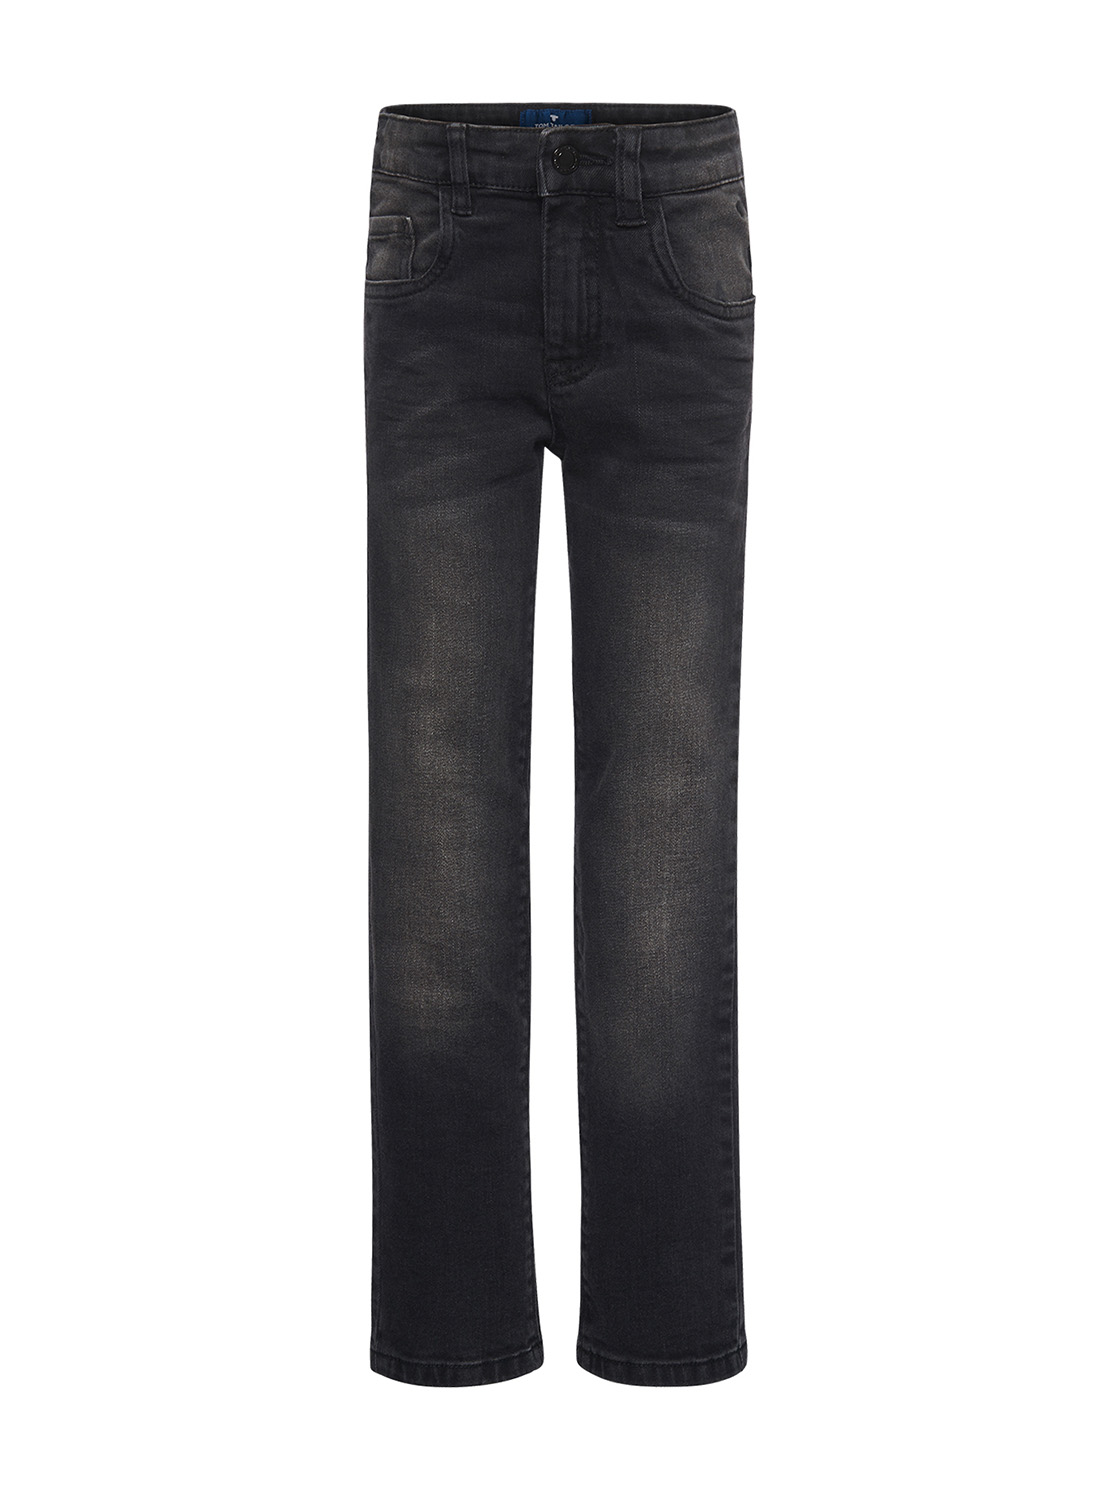 Jeans uni long, rinsed black denim